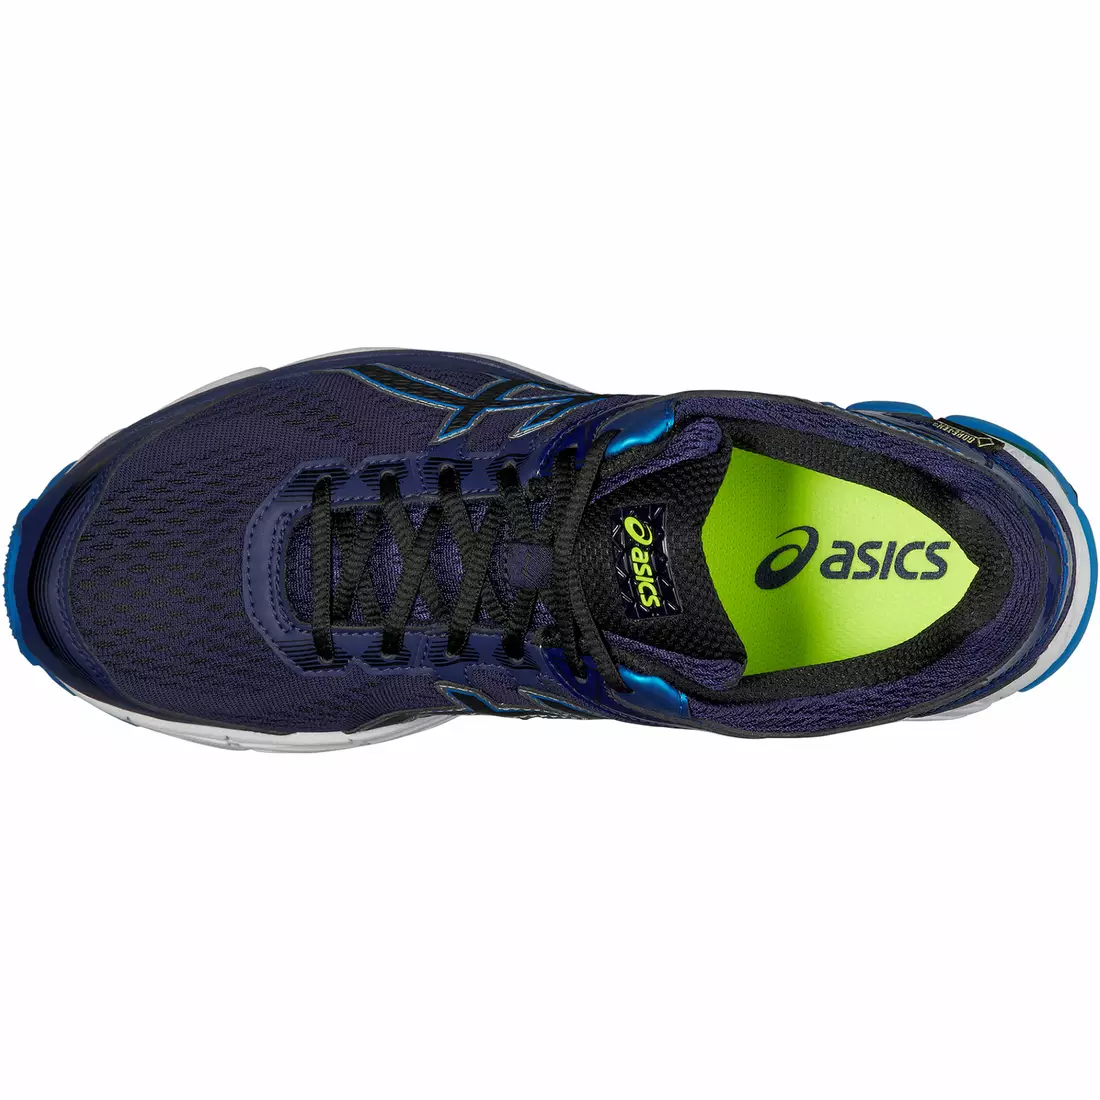 Pantofi de alergare ASICS GT-1000 4 G-TX T5B2N-4990